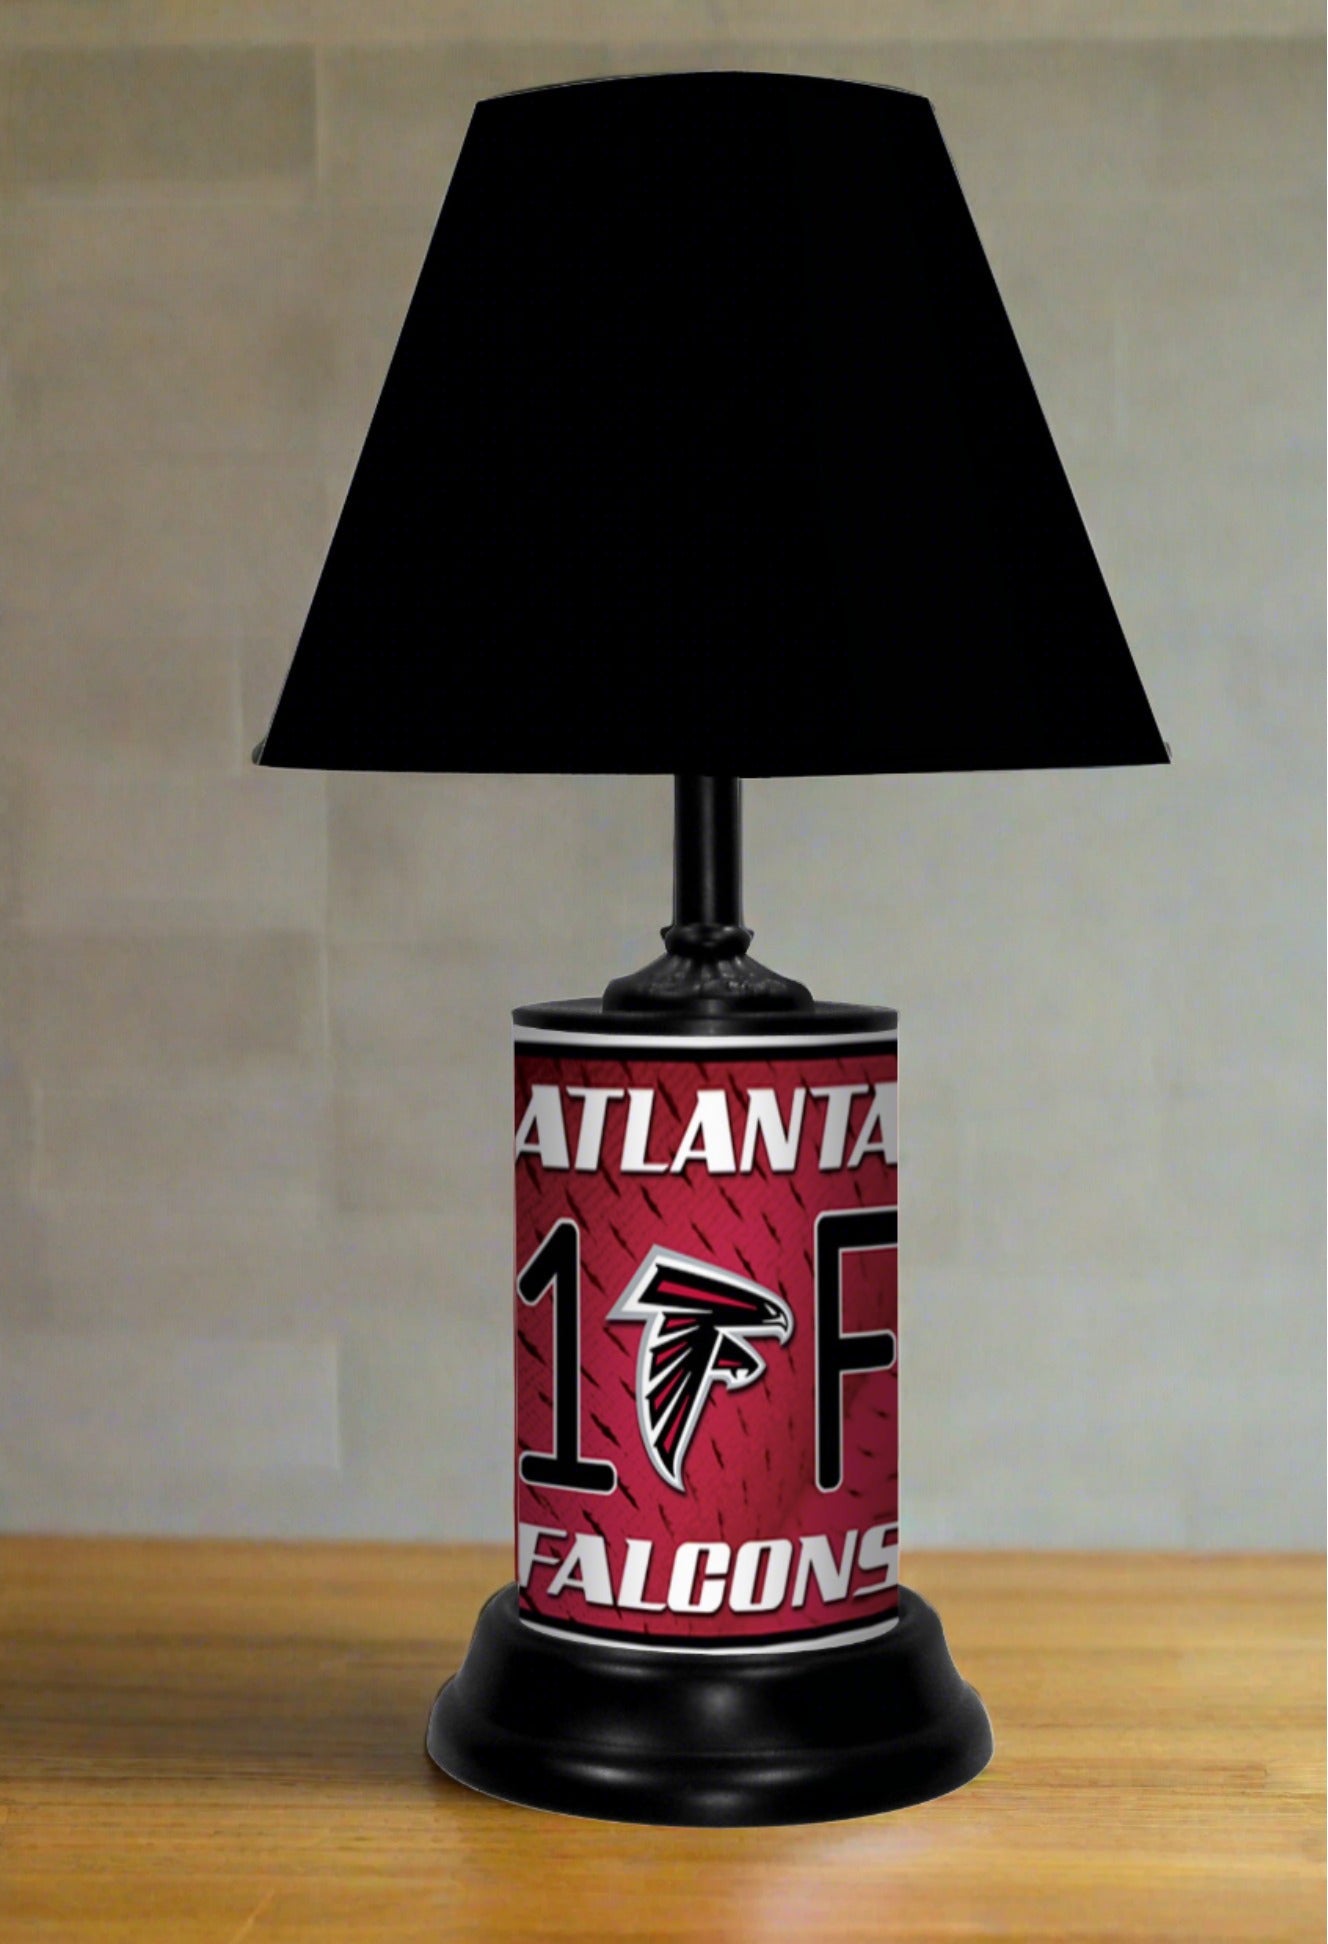 Atlanta Falcons #1 Fan Lamp with Shade by GTEI